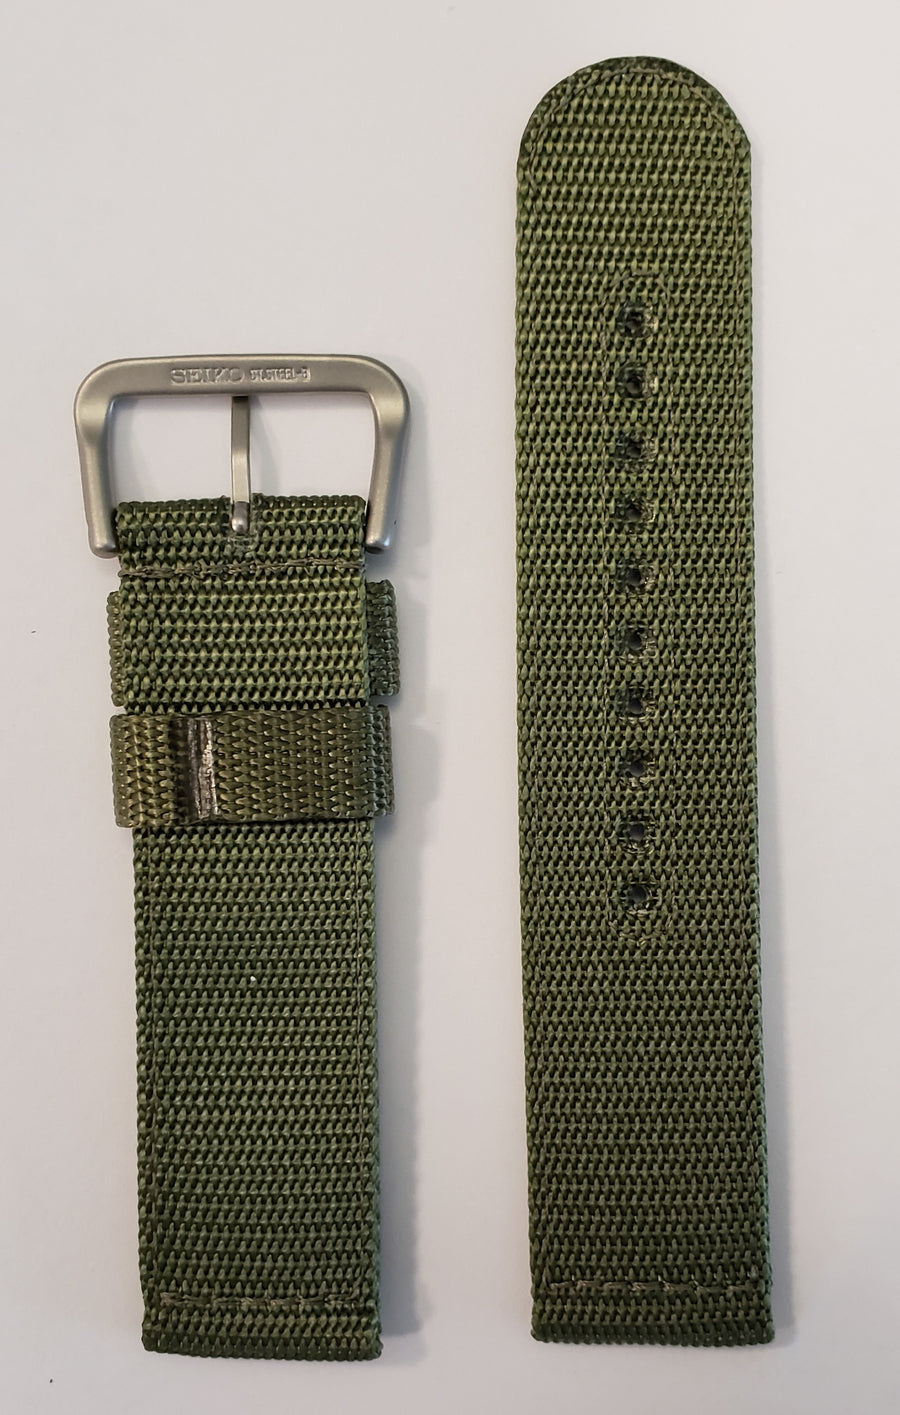 SEIKO 22mm SNZG09 / SNZG09J1 Green Nylon Watch Band - WATCHBAND EXPERT